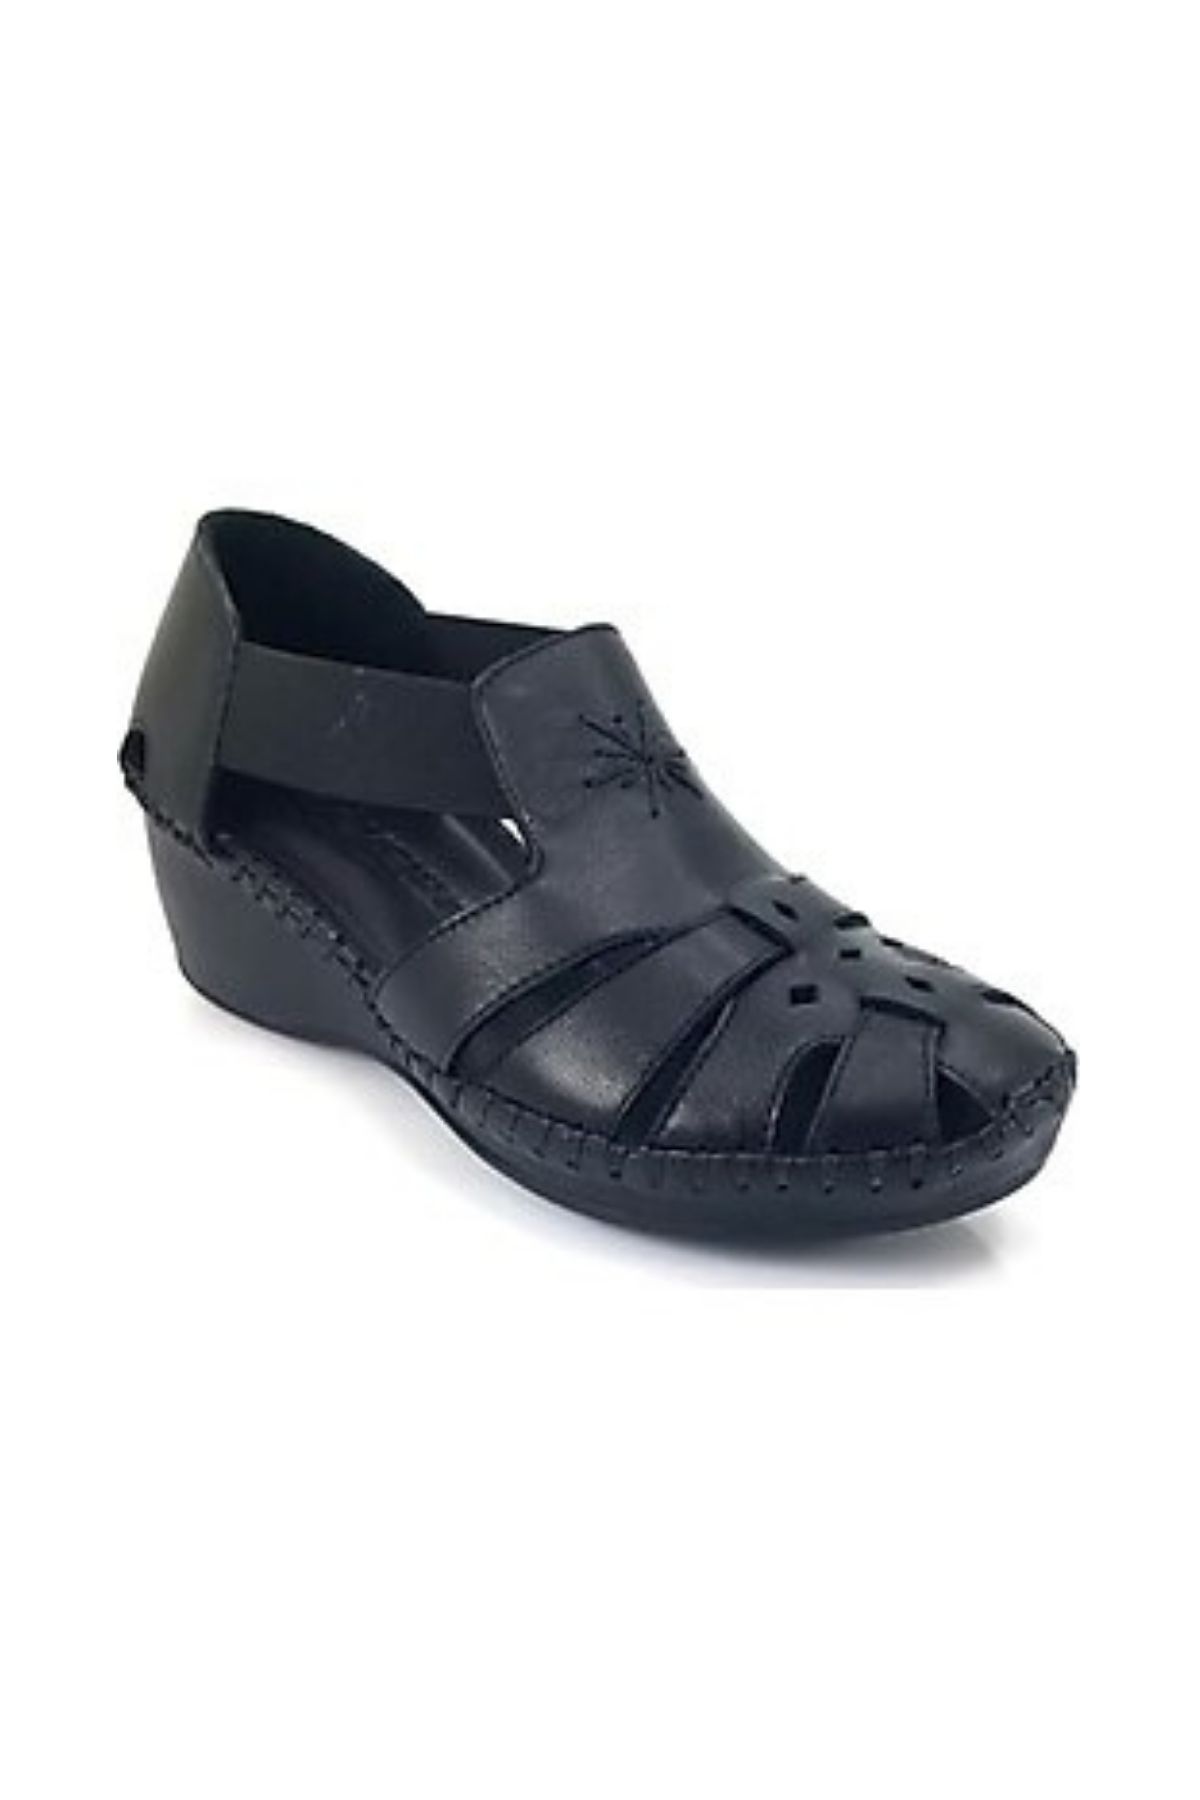 Kadın Comfort Deri Sandalet Lacivert 18793056 - Thumbnail